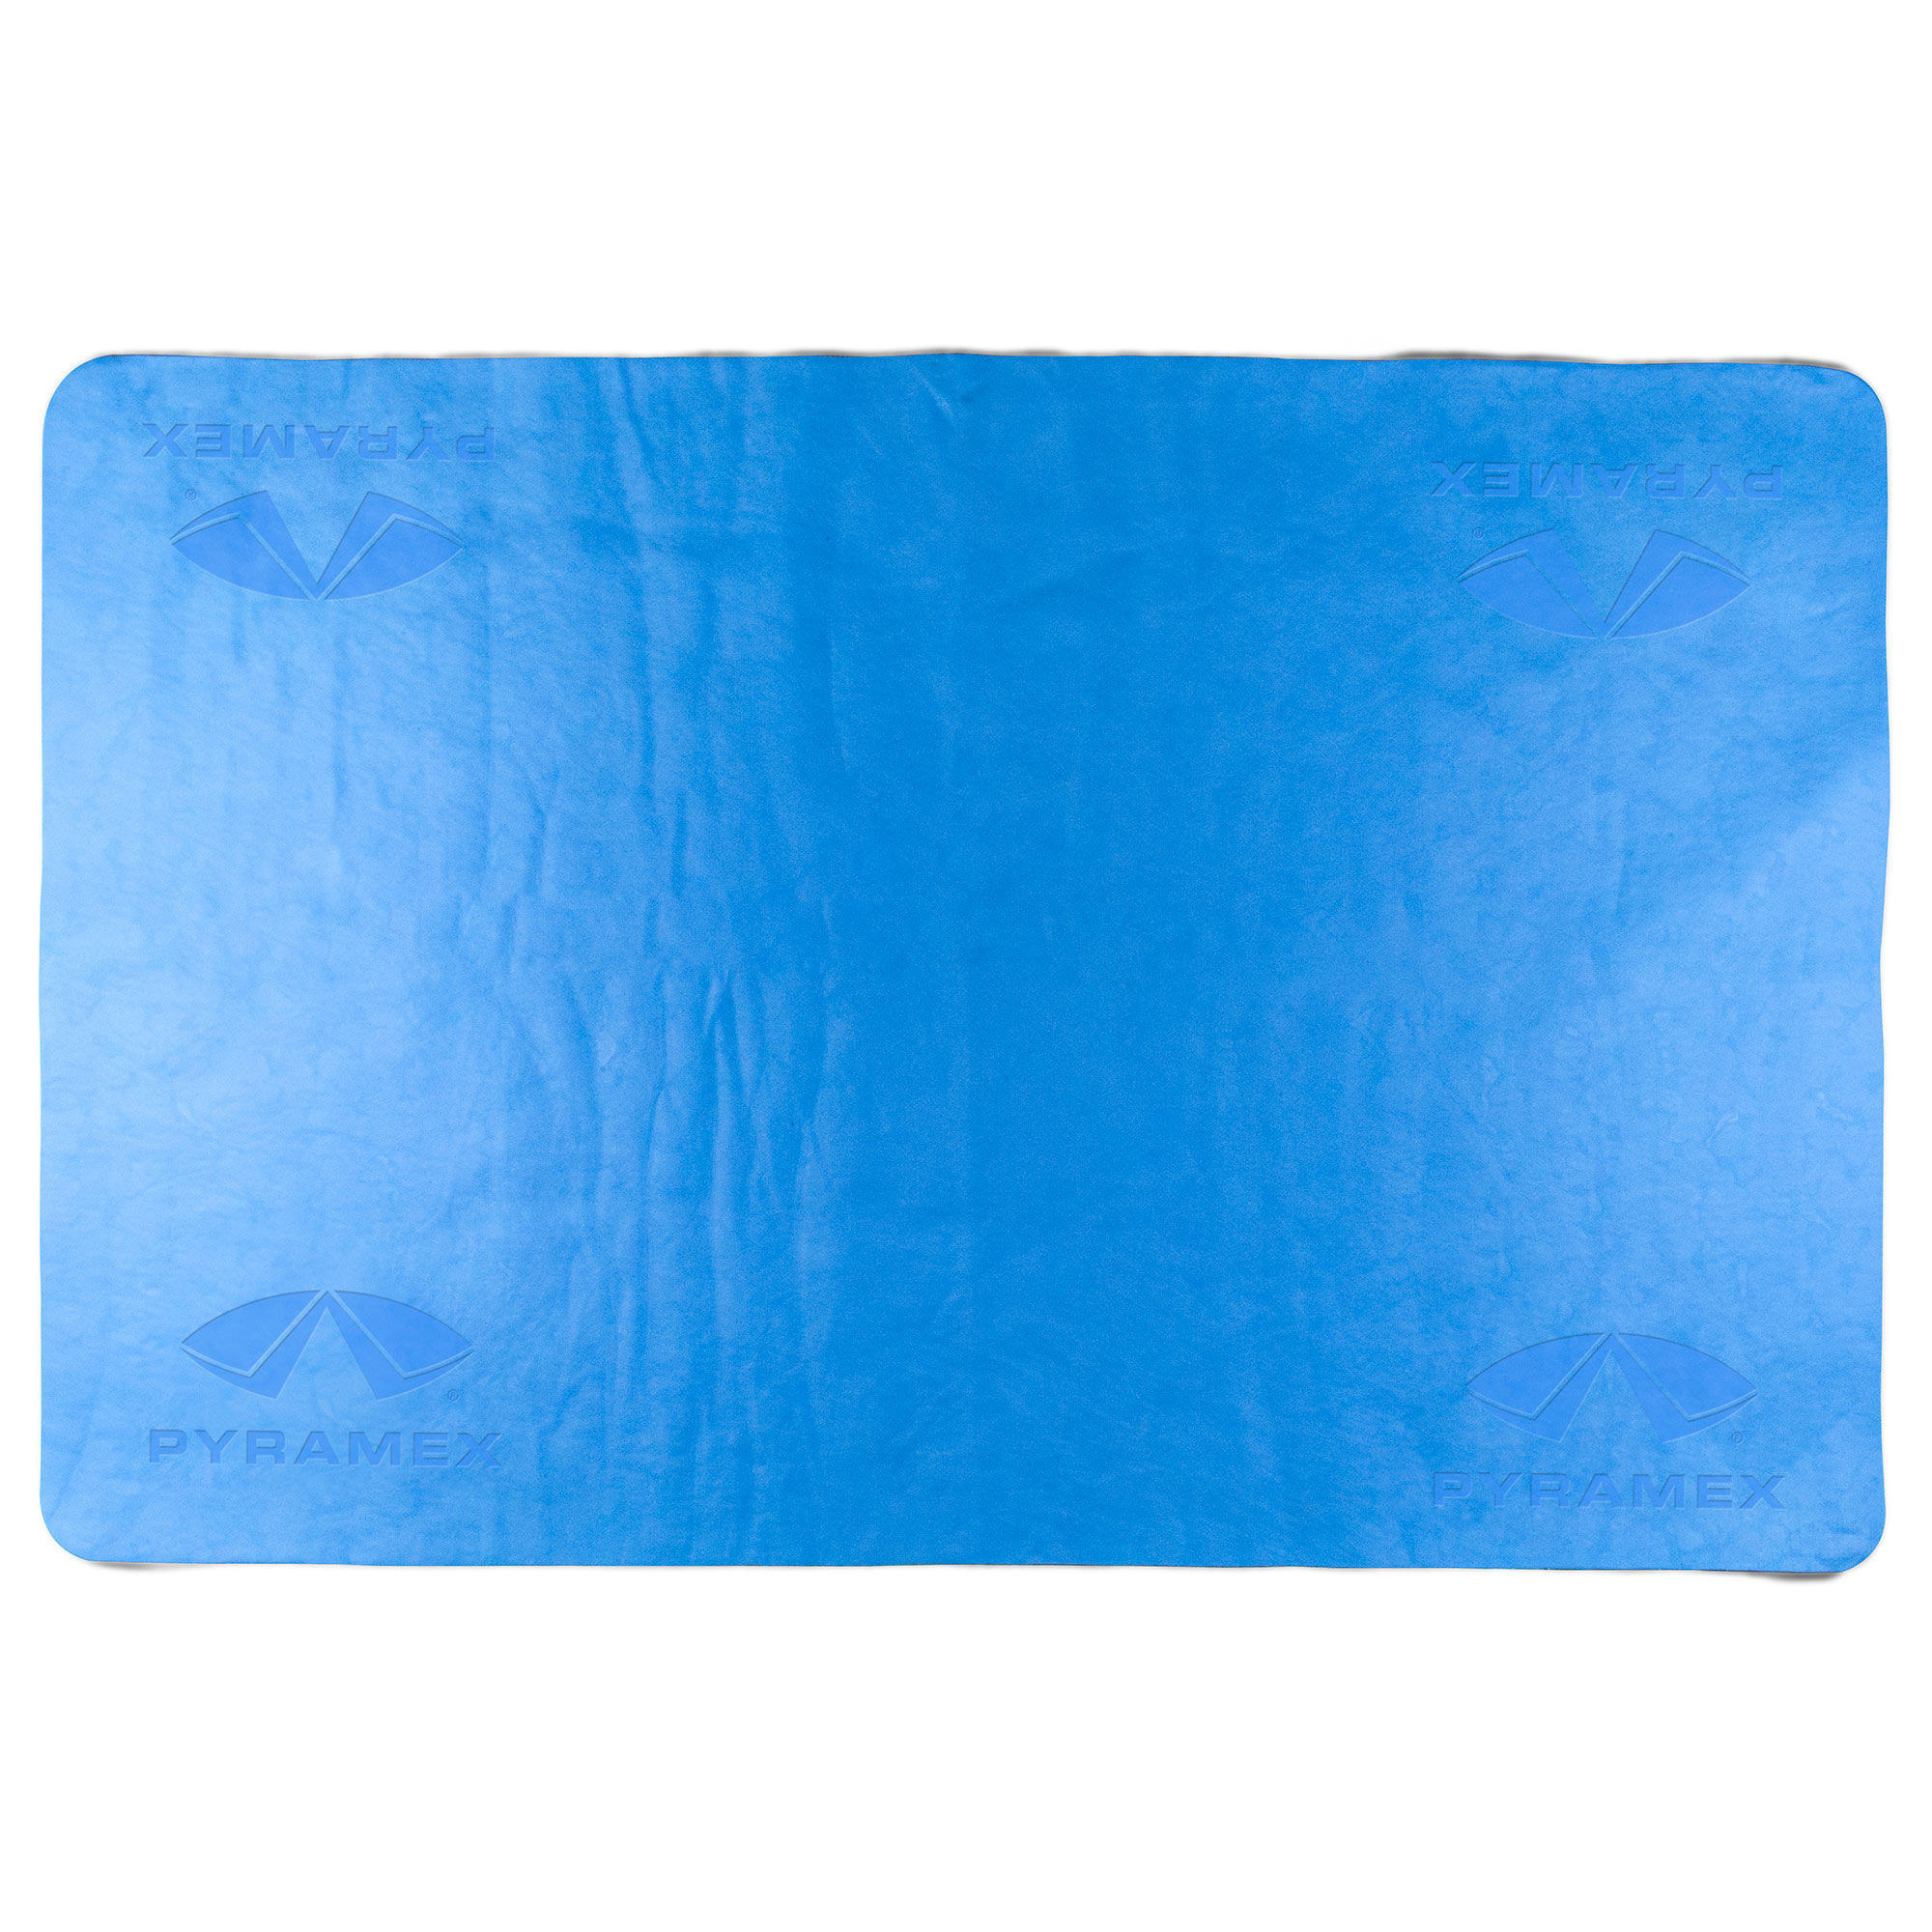 Radians RCS10 Arctic Radwear Cooling Towel - Blue